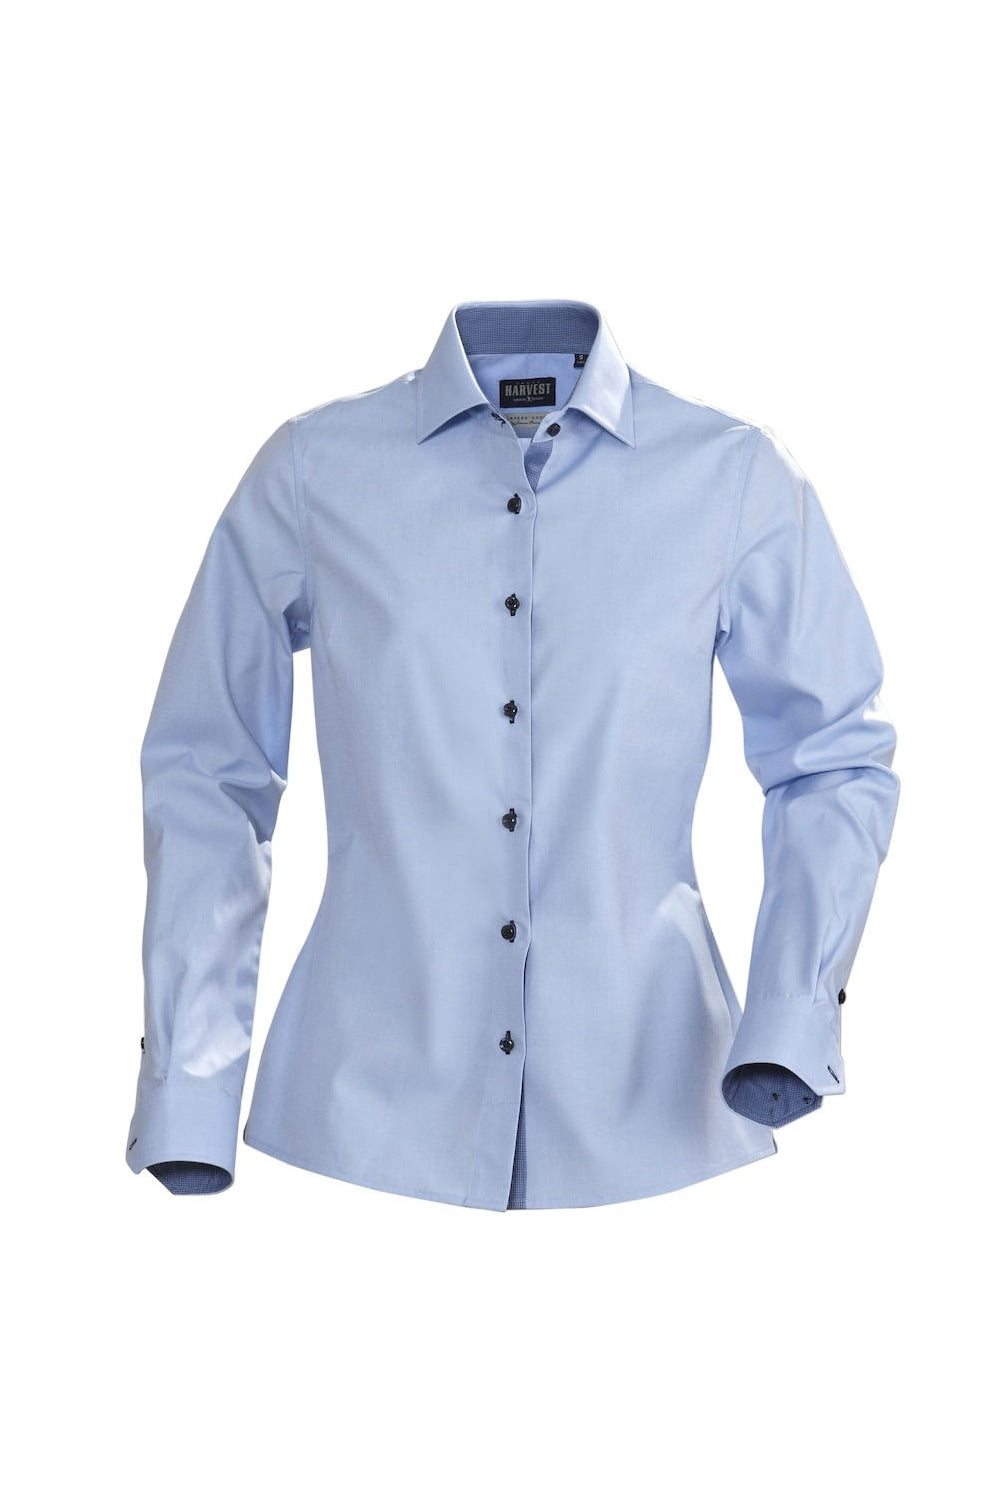 Womens/Ladies Baltimore Formal Shirt - Light Blue